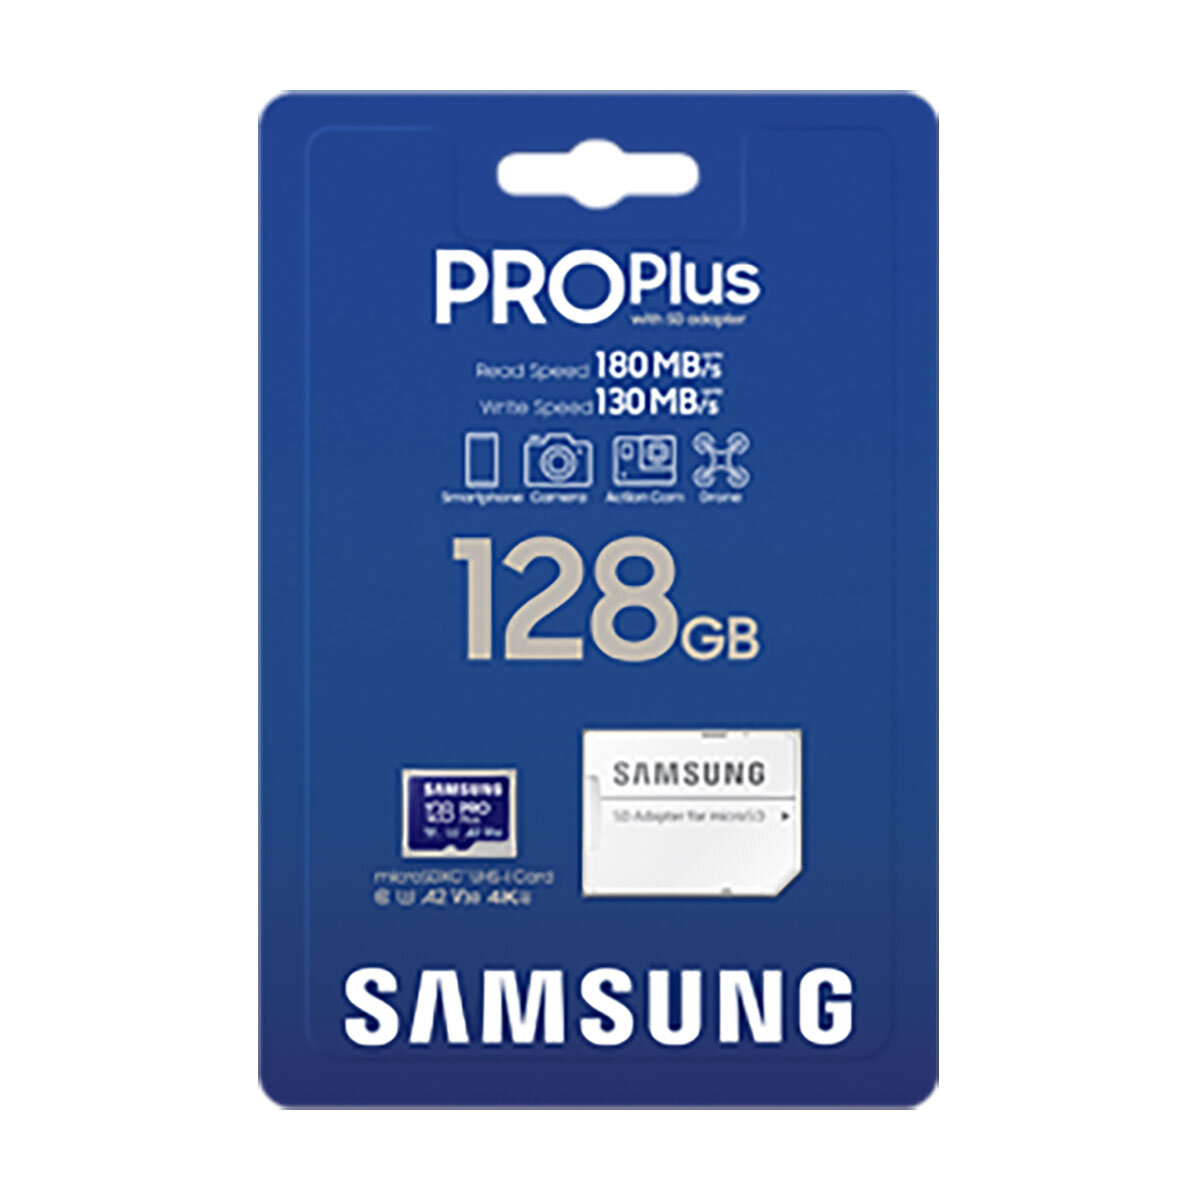 Samsung 128 GB miiscroSD in original packaging